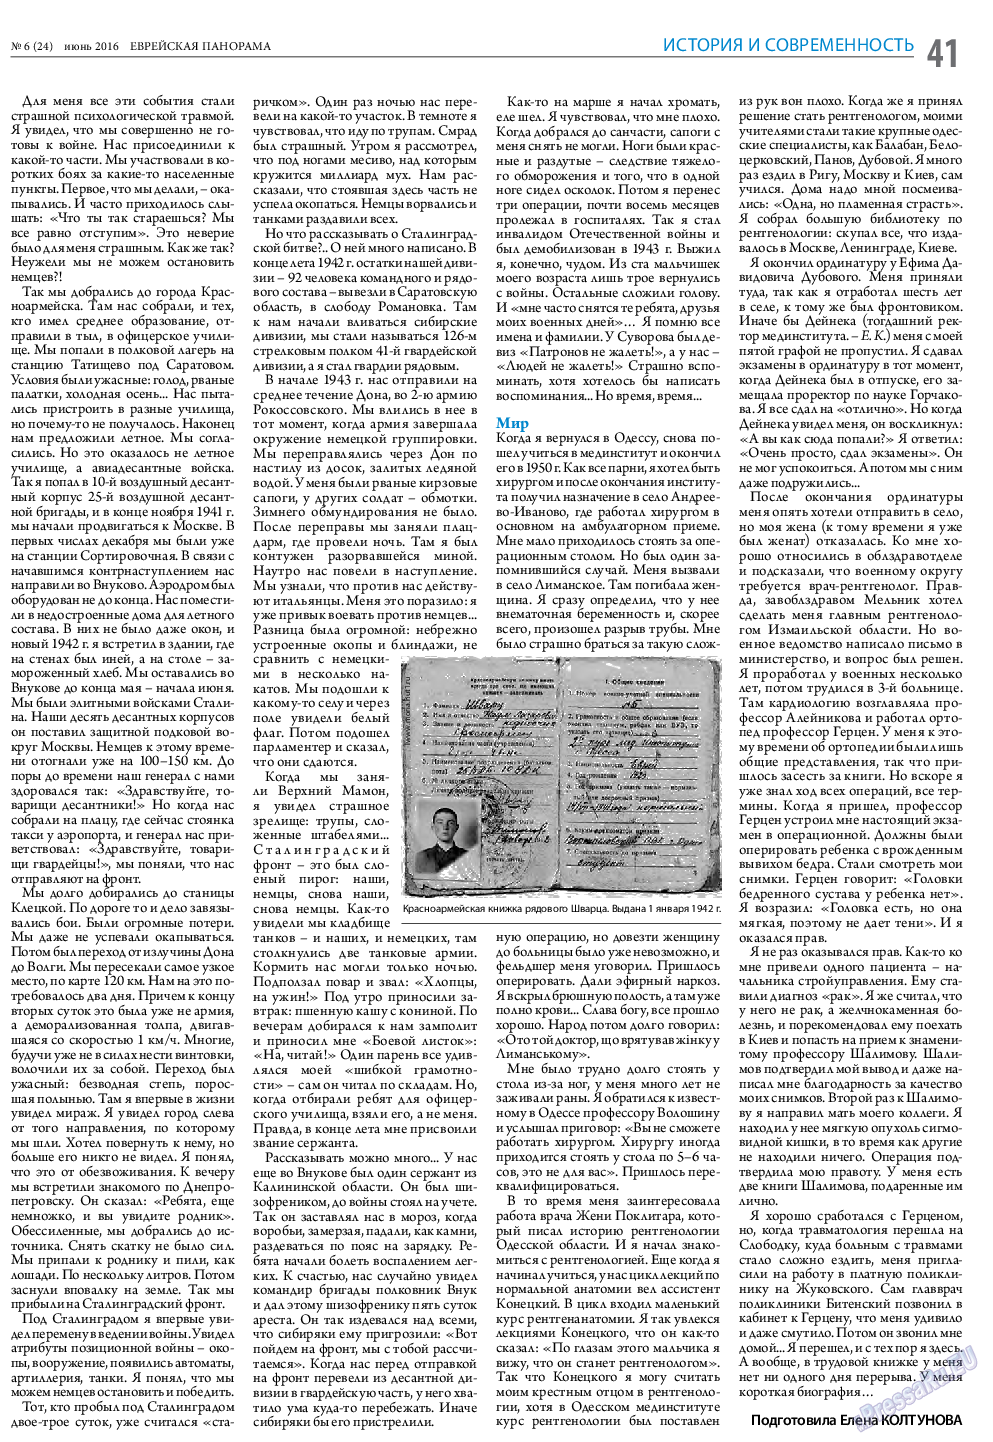 Еврейская панорама, газета. 2016 №6 стр.41